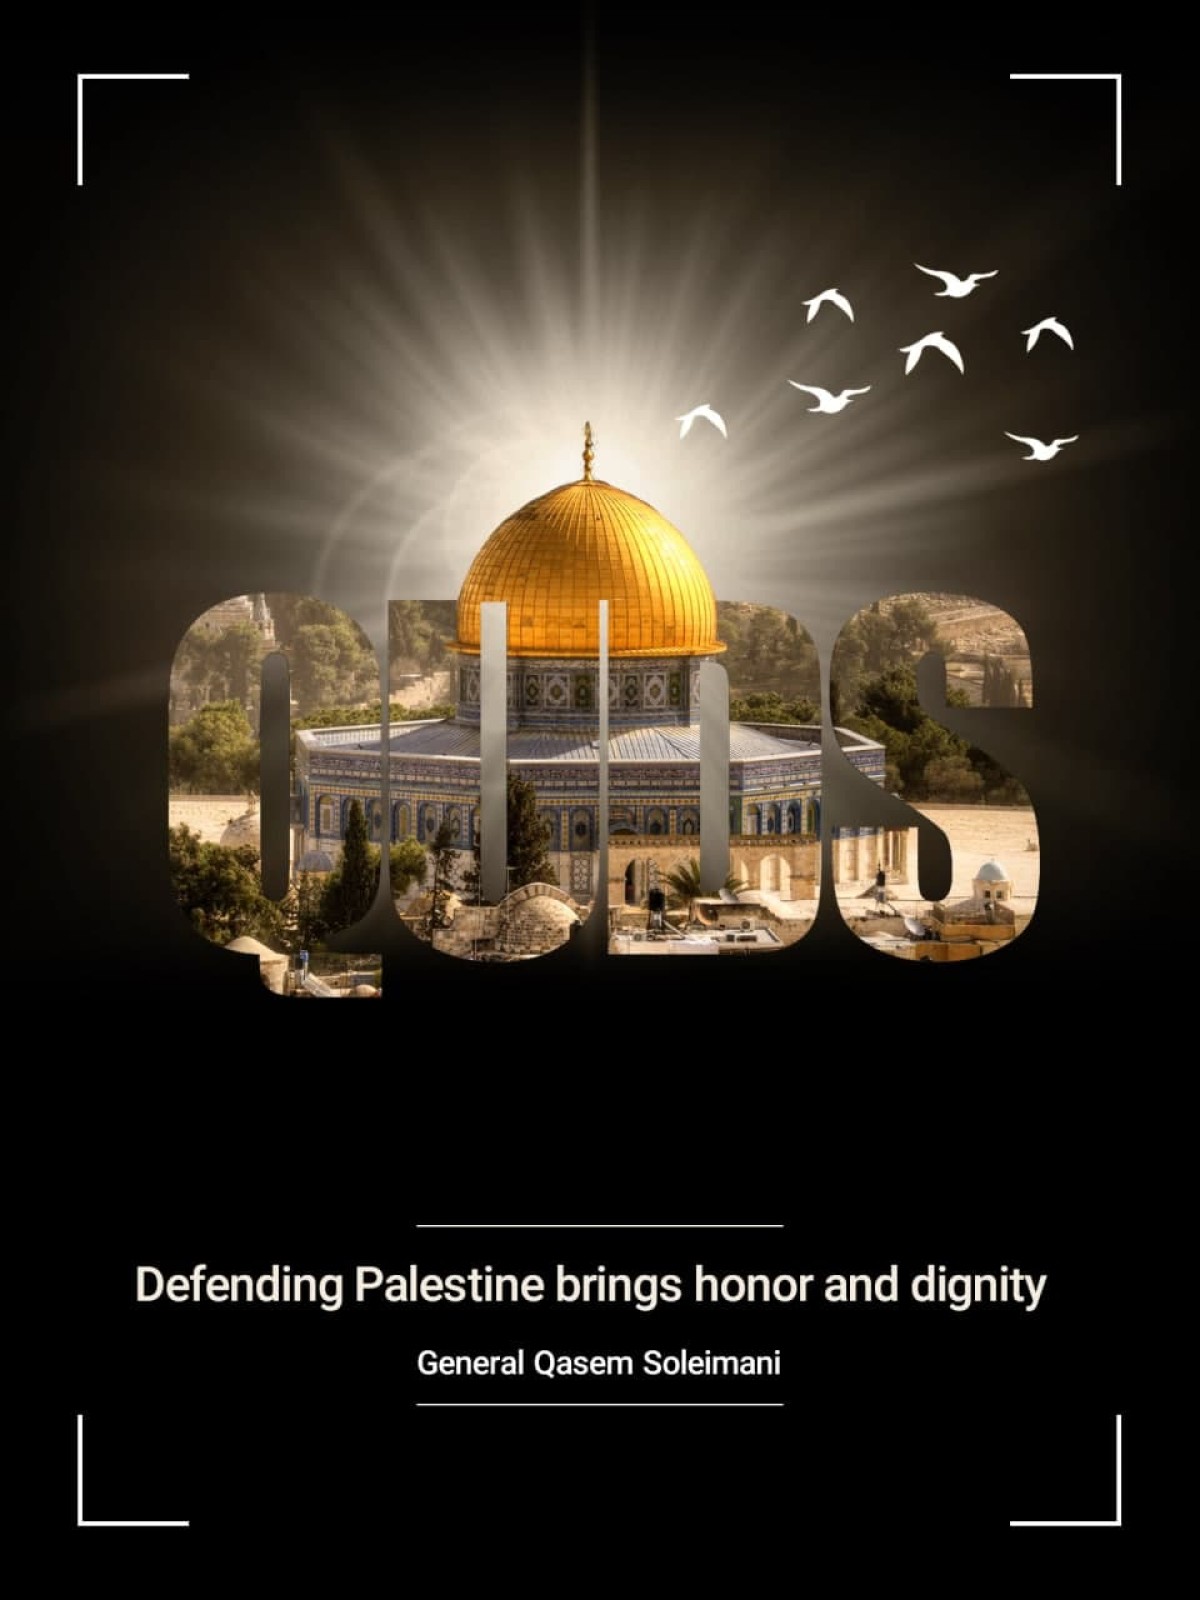  Defending Palestine brings honor and dignity